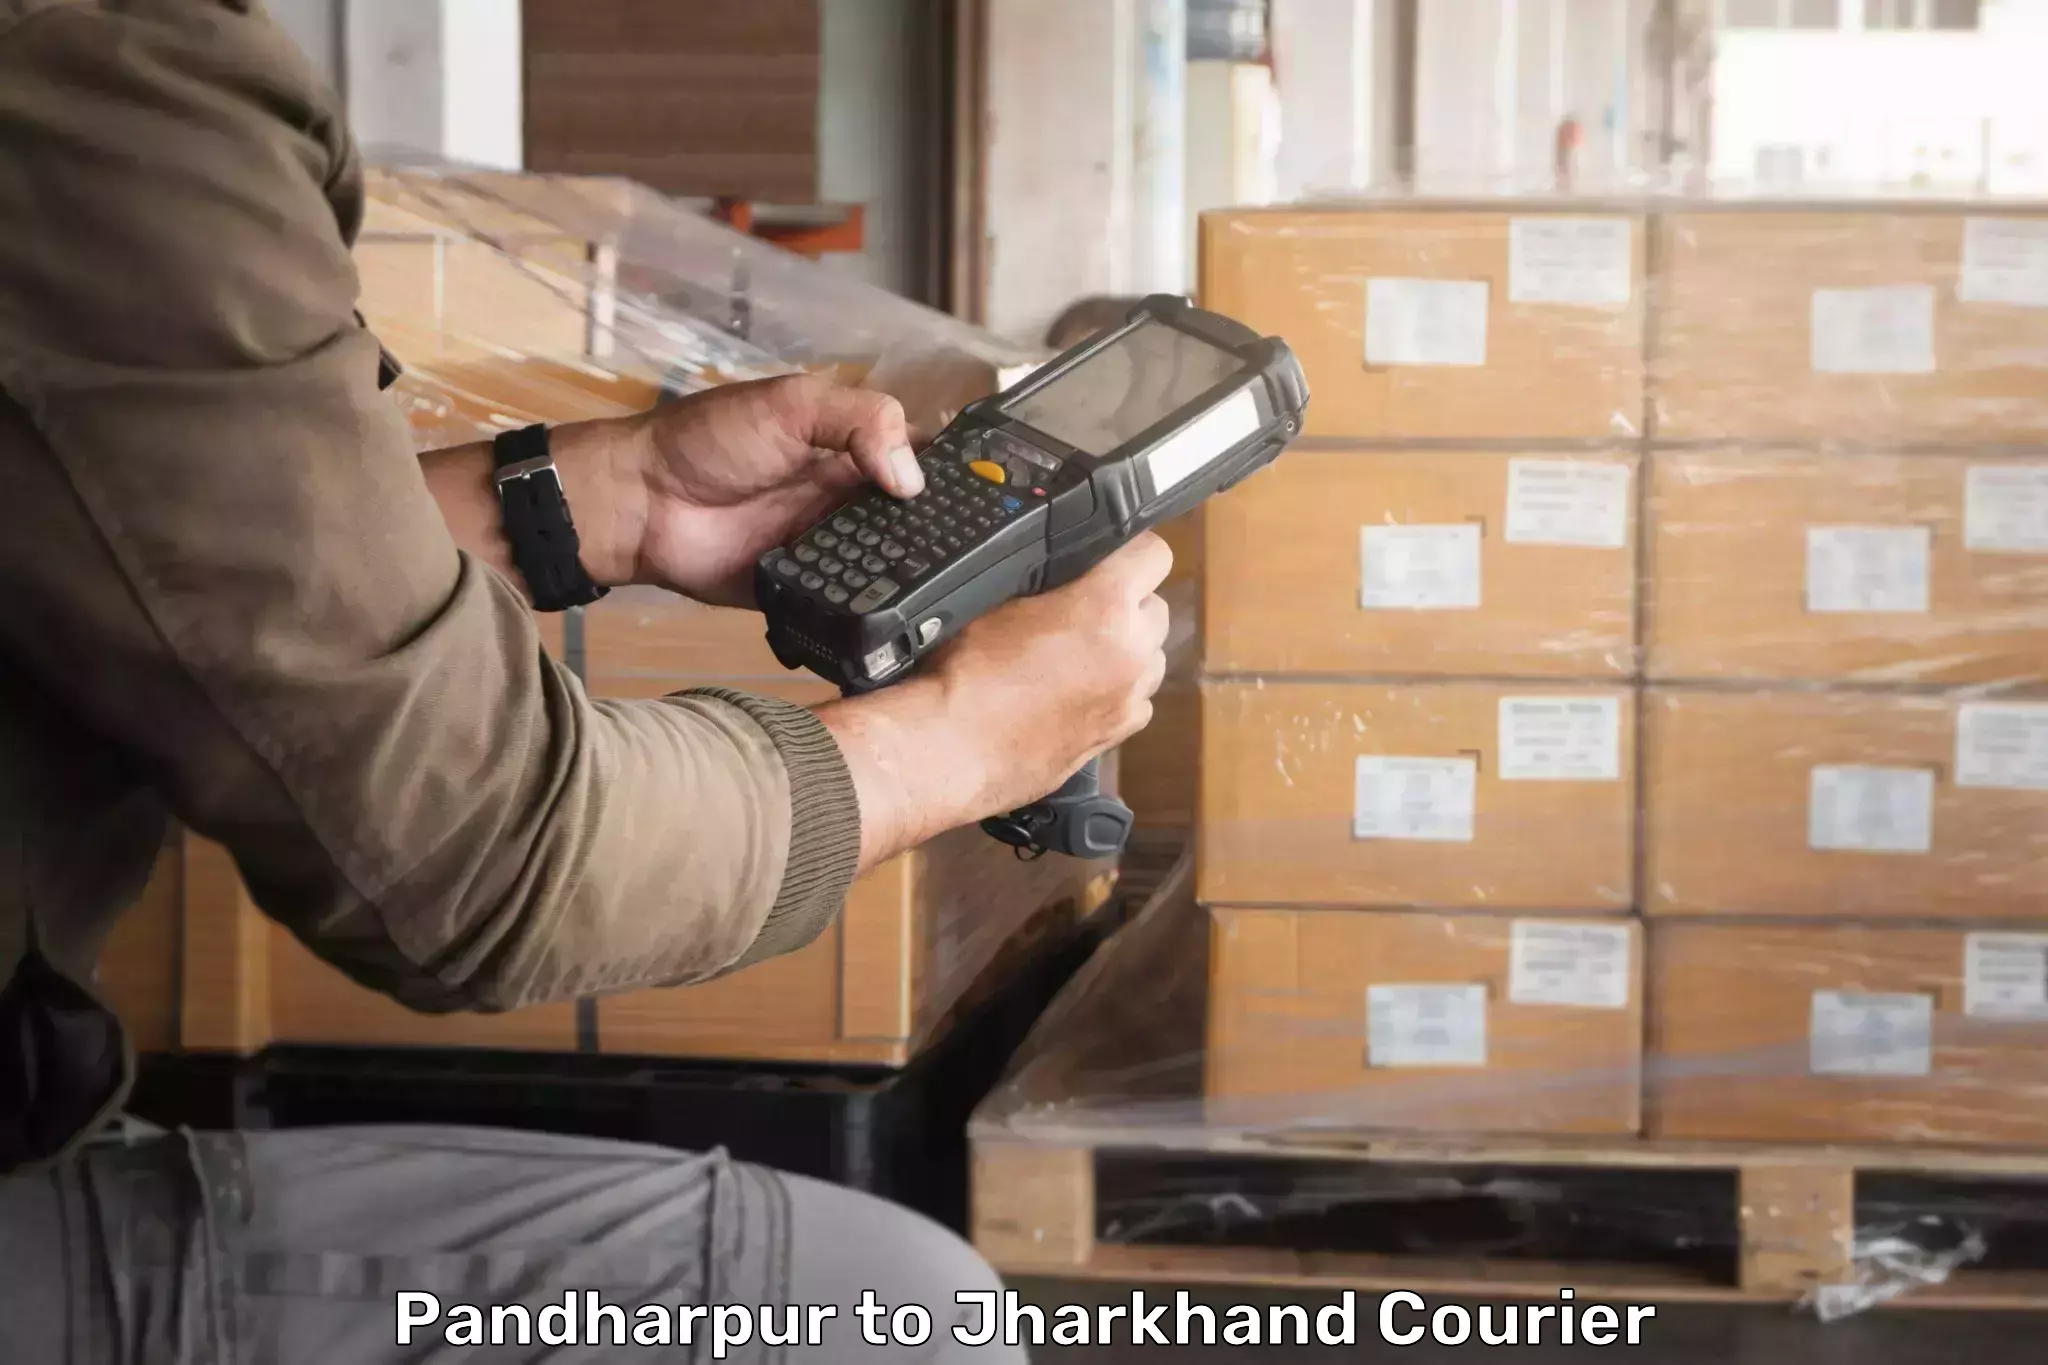 Courier service comparison Pandharpur to Isri